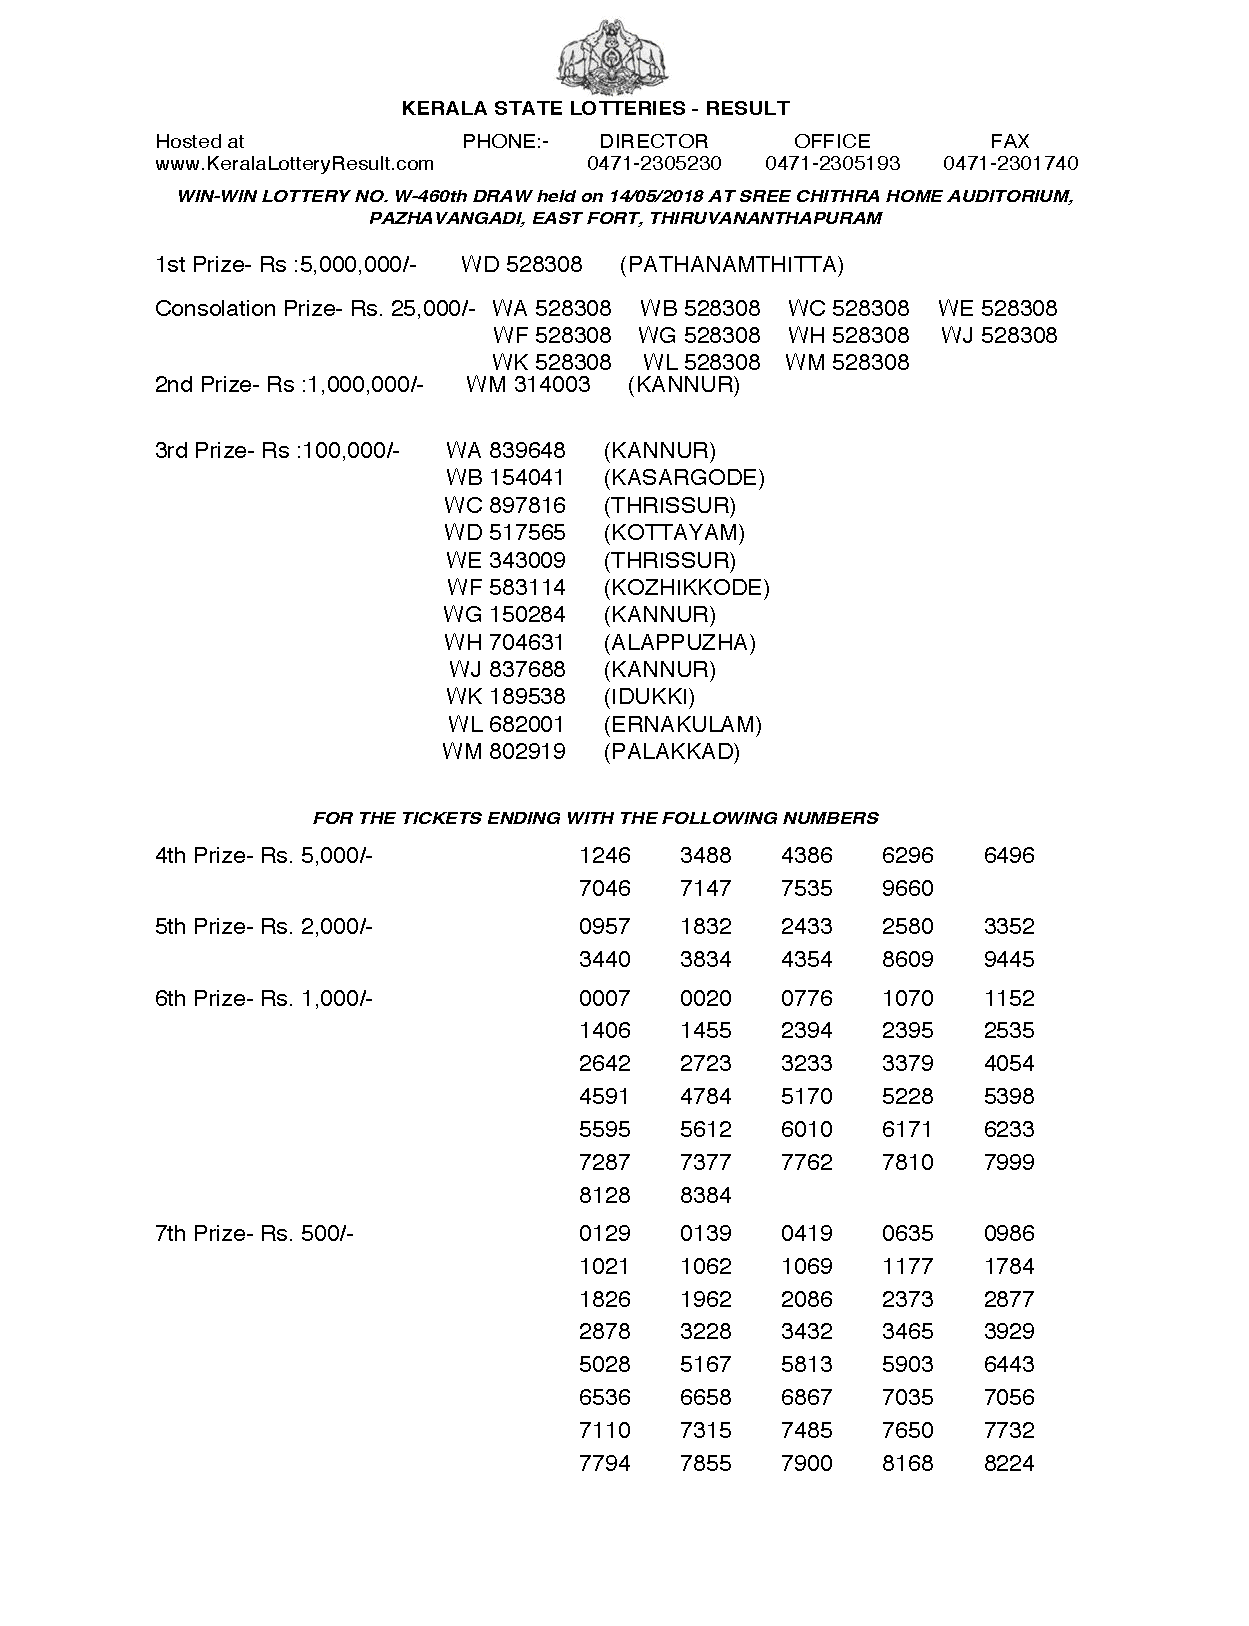 Winwin W460 Kerala Lottery Results Screenshot: Page 1